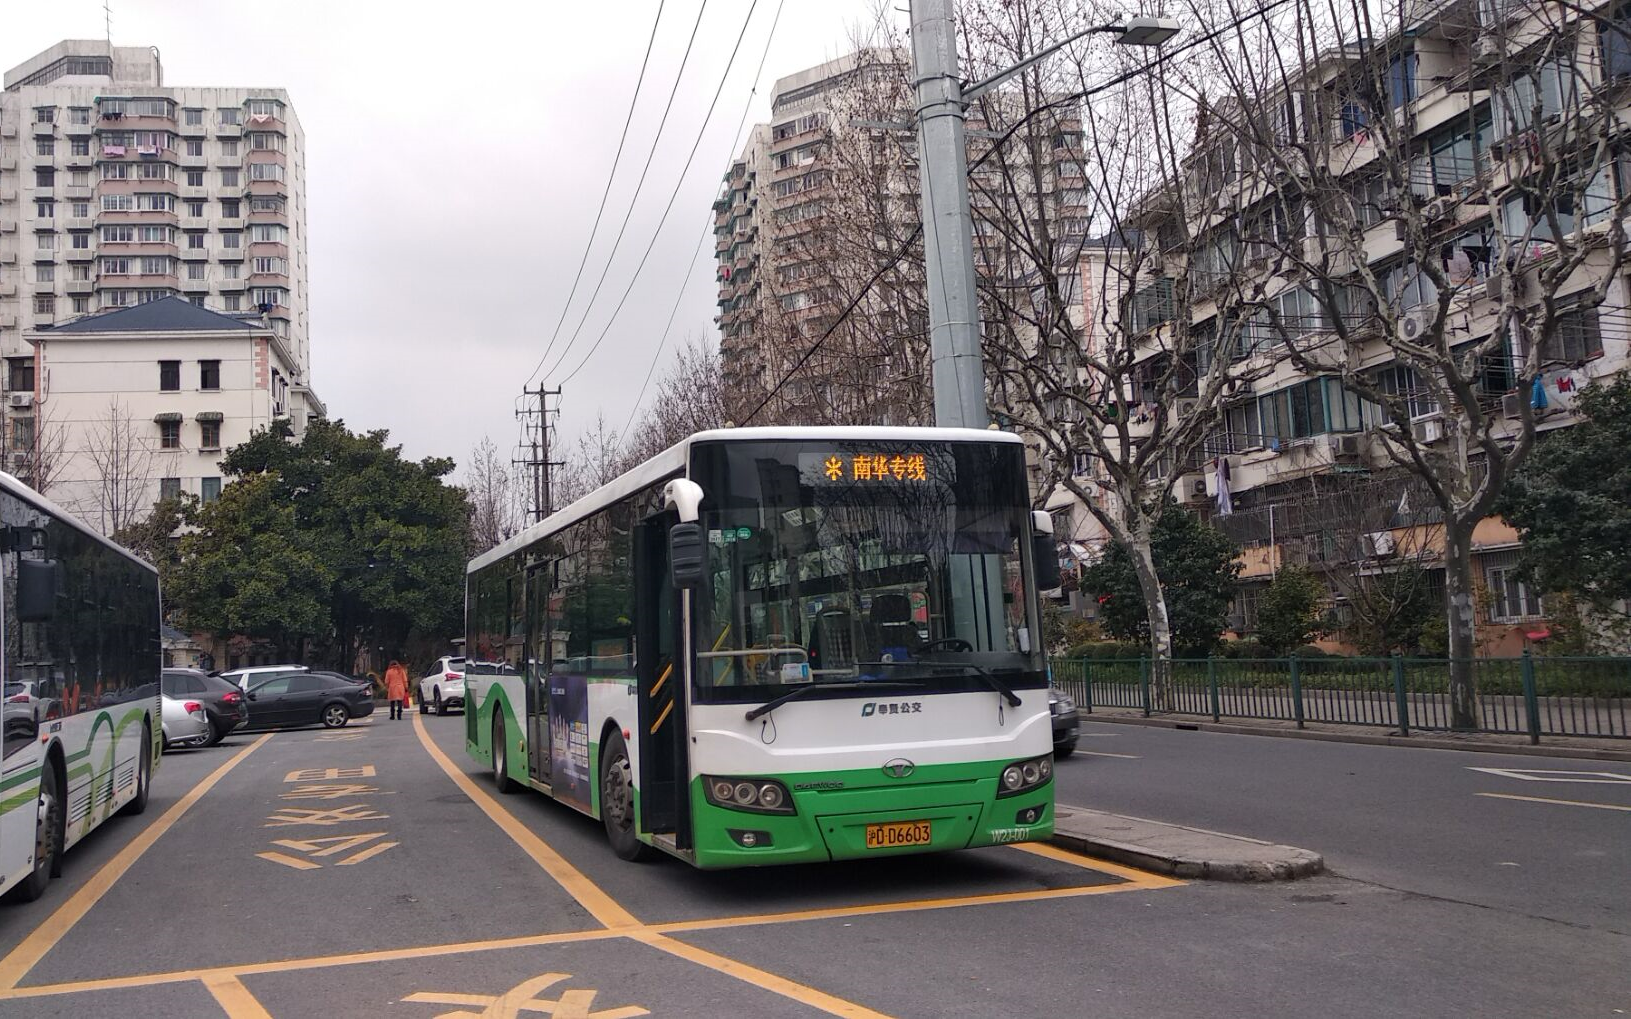 46km上海公交第二作南华专线可能是石川专线撤销后上海纯地面线路跳站